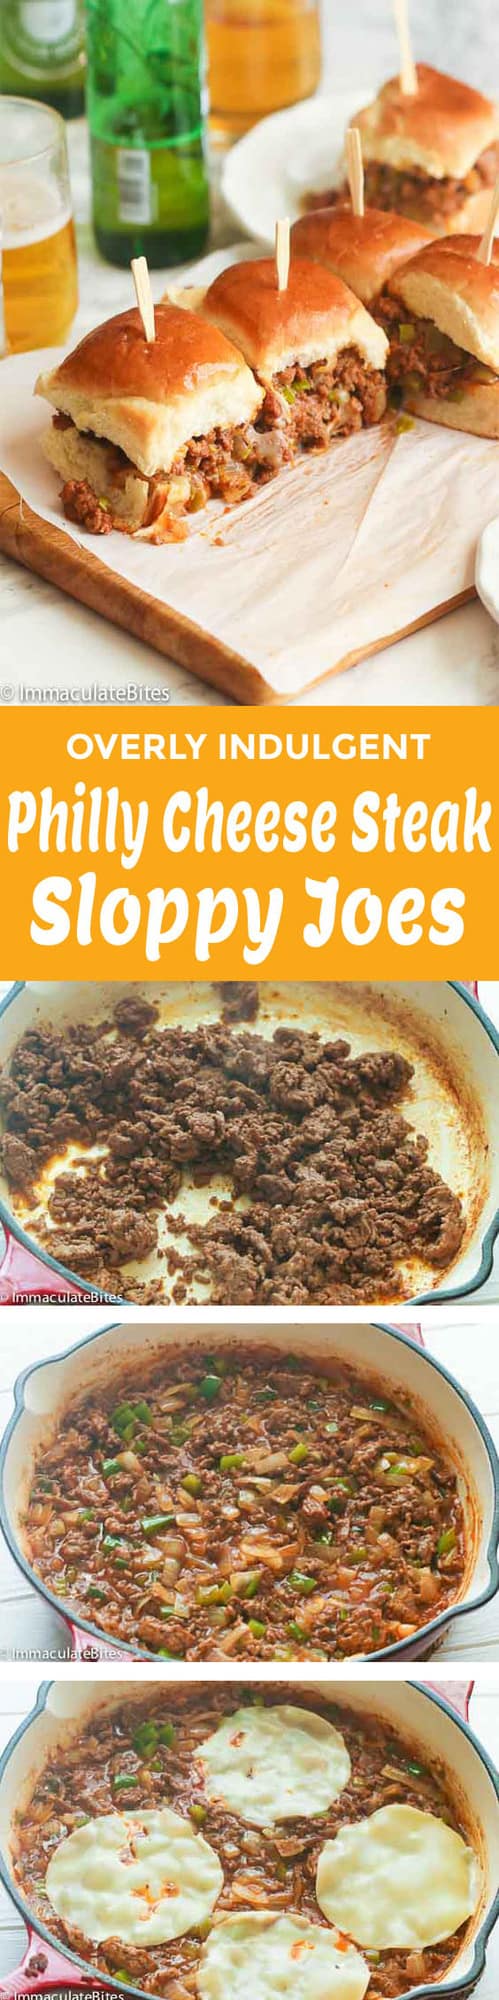 philly cheese steak sloppy joes